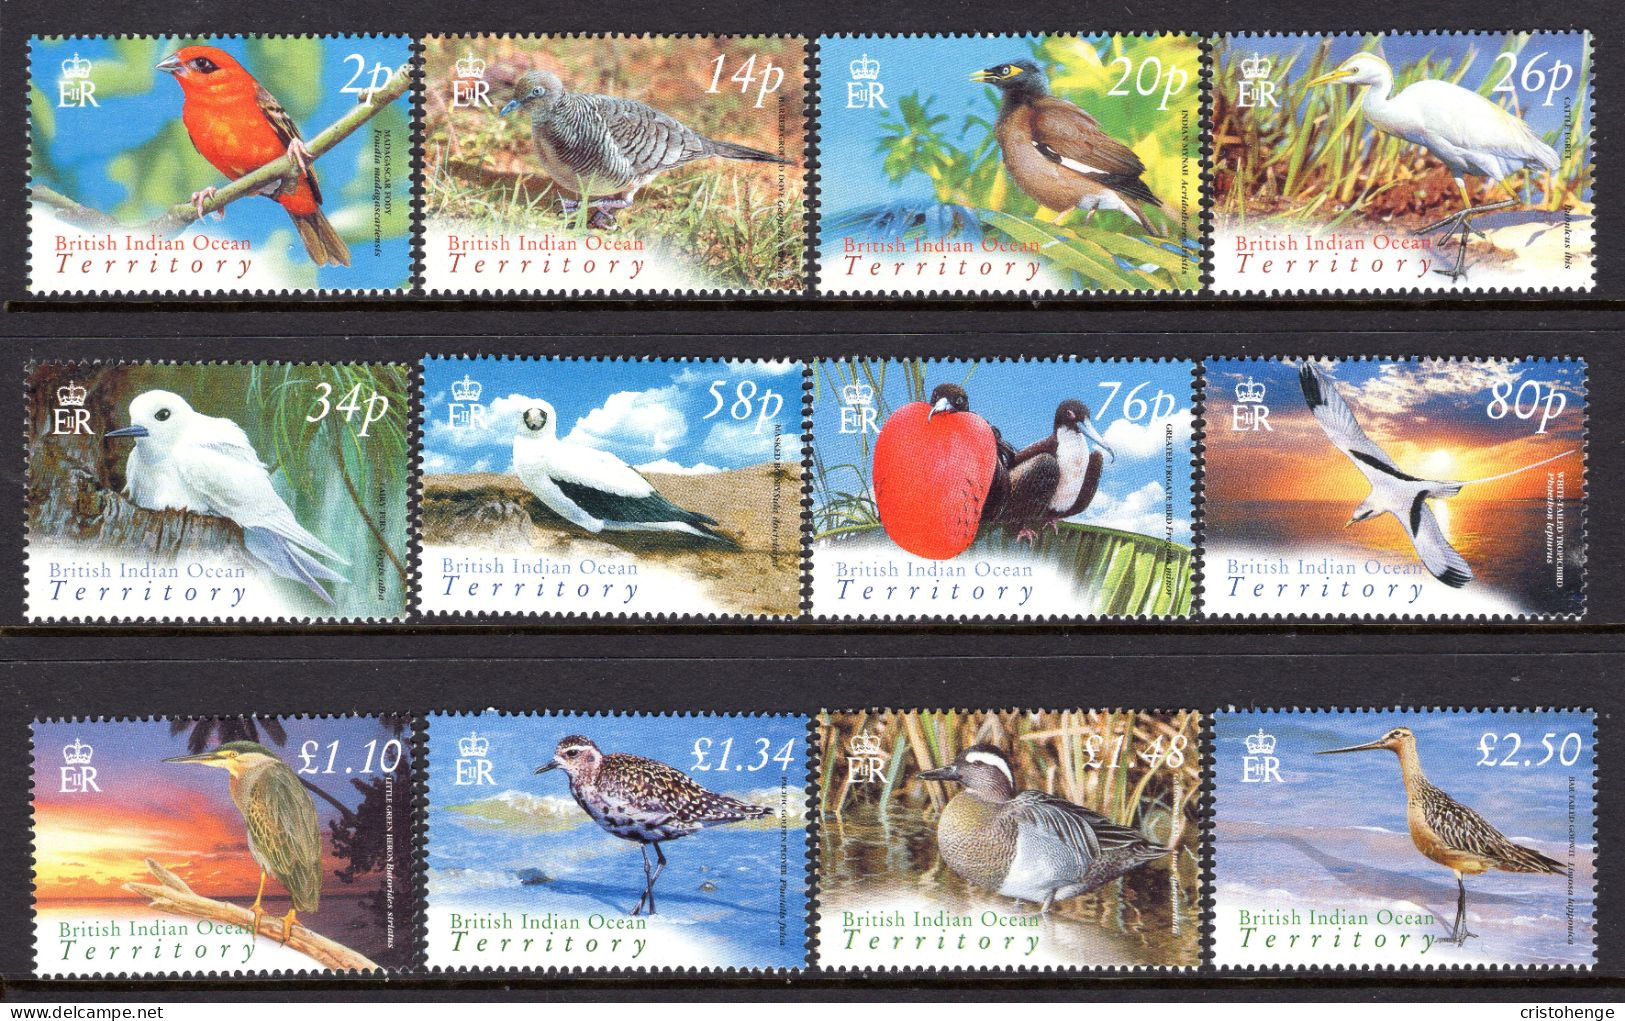 British Indian Ocean Territory, BIOT 2004 Birds Set MNH (SG 296-307) - British Indian Ocean Territory (BIOT)